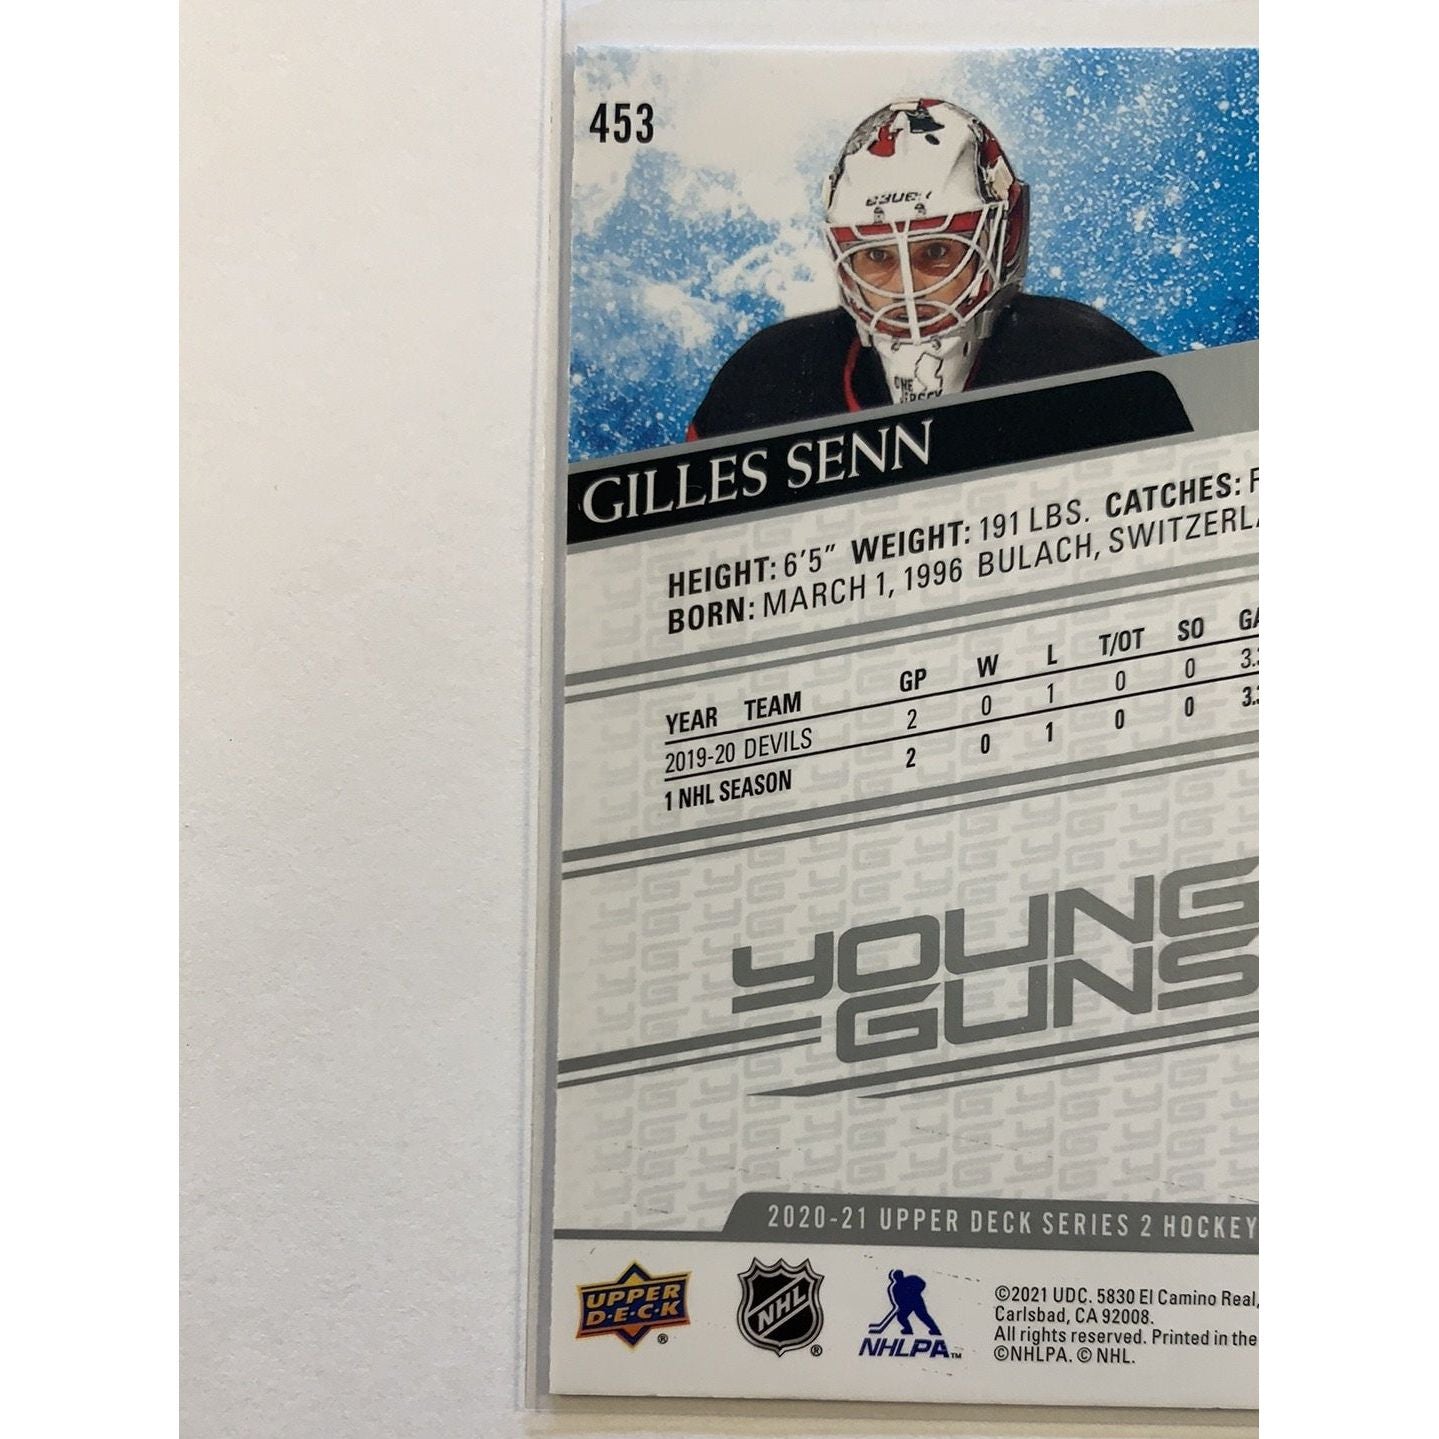  2020-21 Upper Deck Series 2 Gilles Senn Young Guns DAMAGED  Local Legends Cards & Collectibles